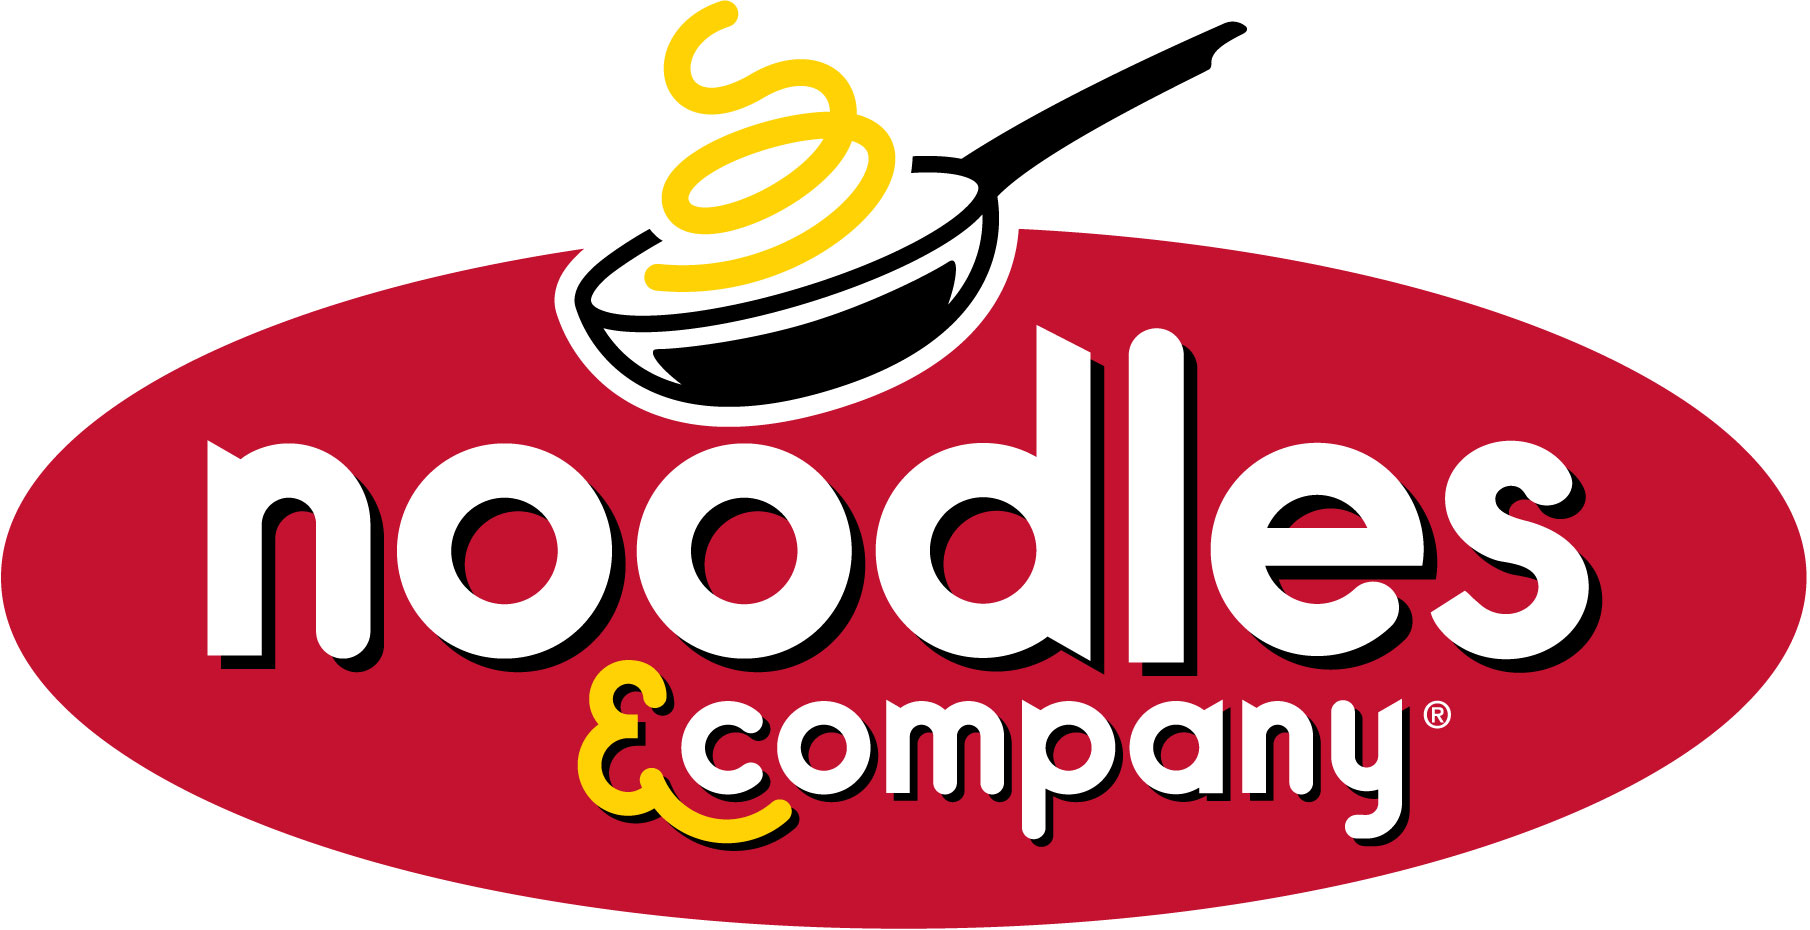 Pink and white Noodle E company logo